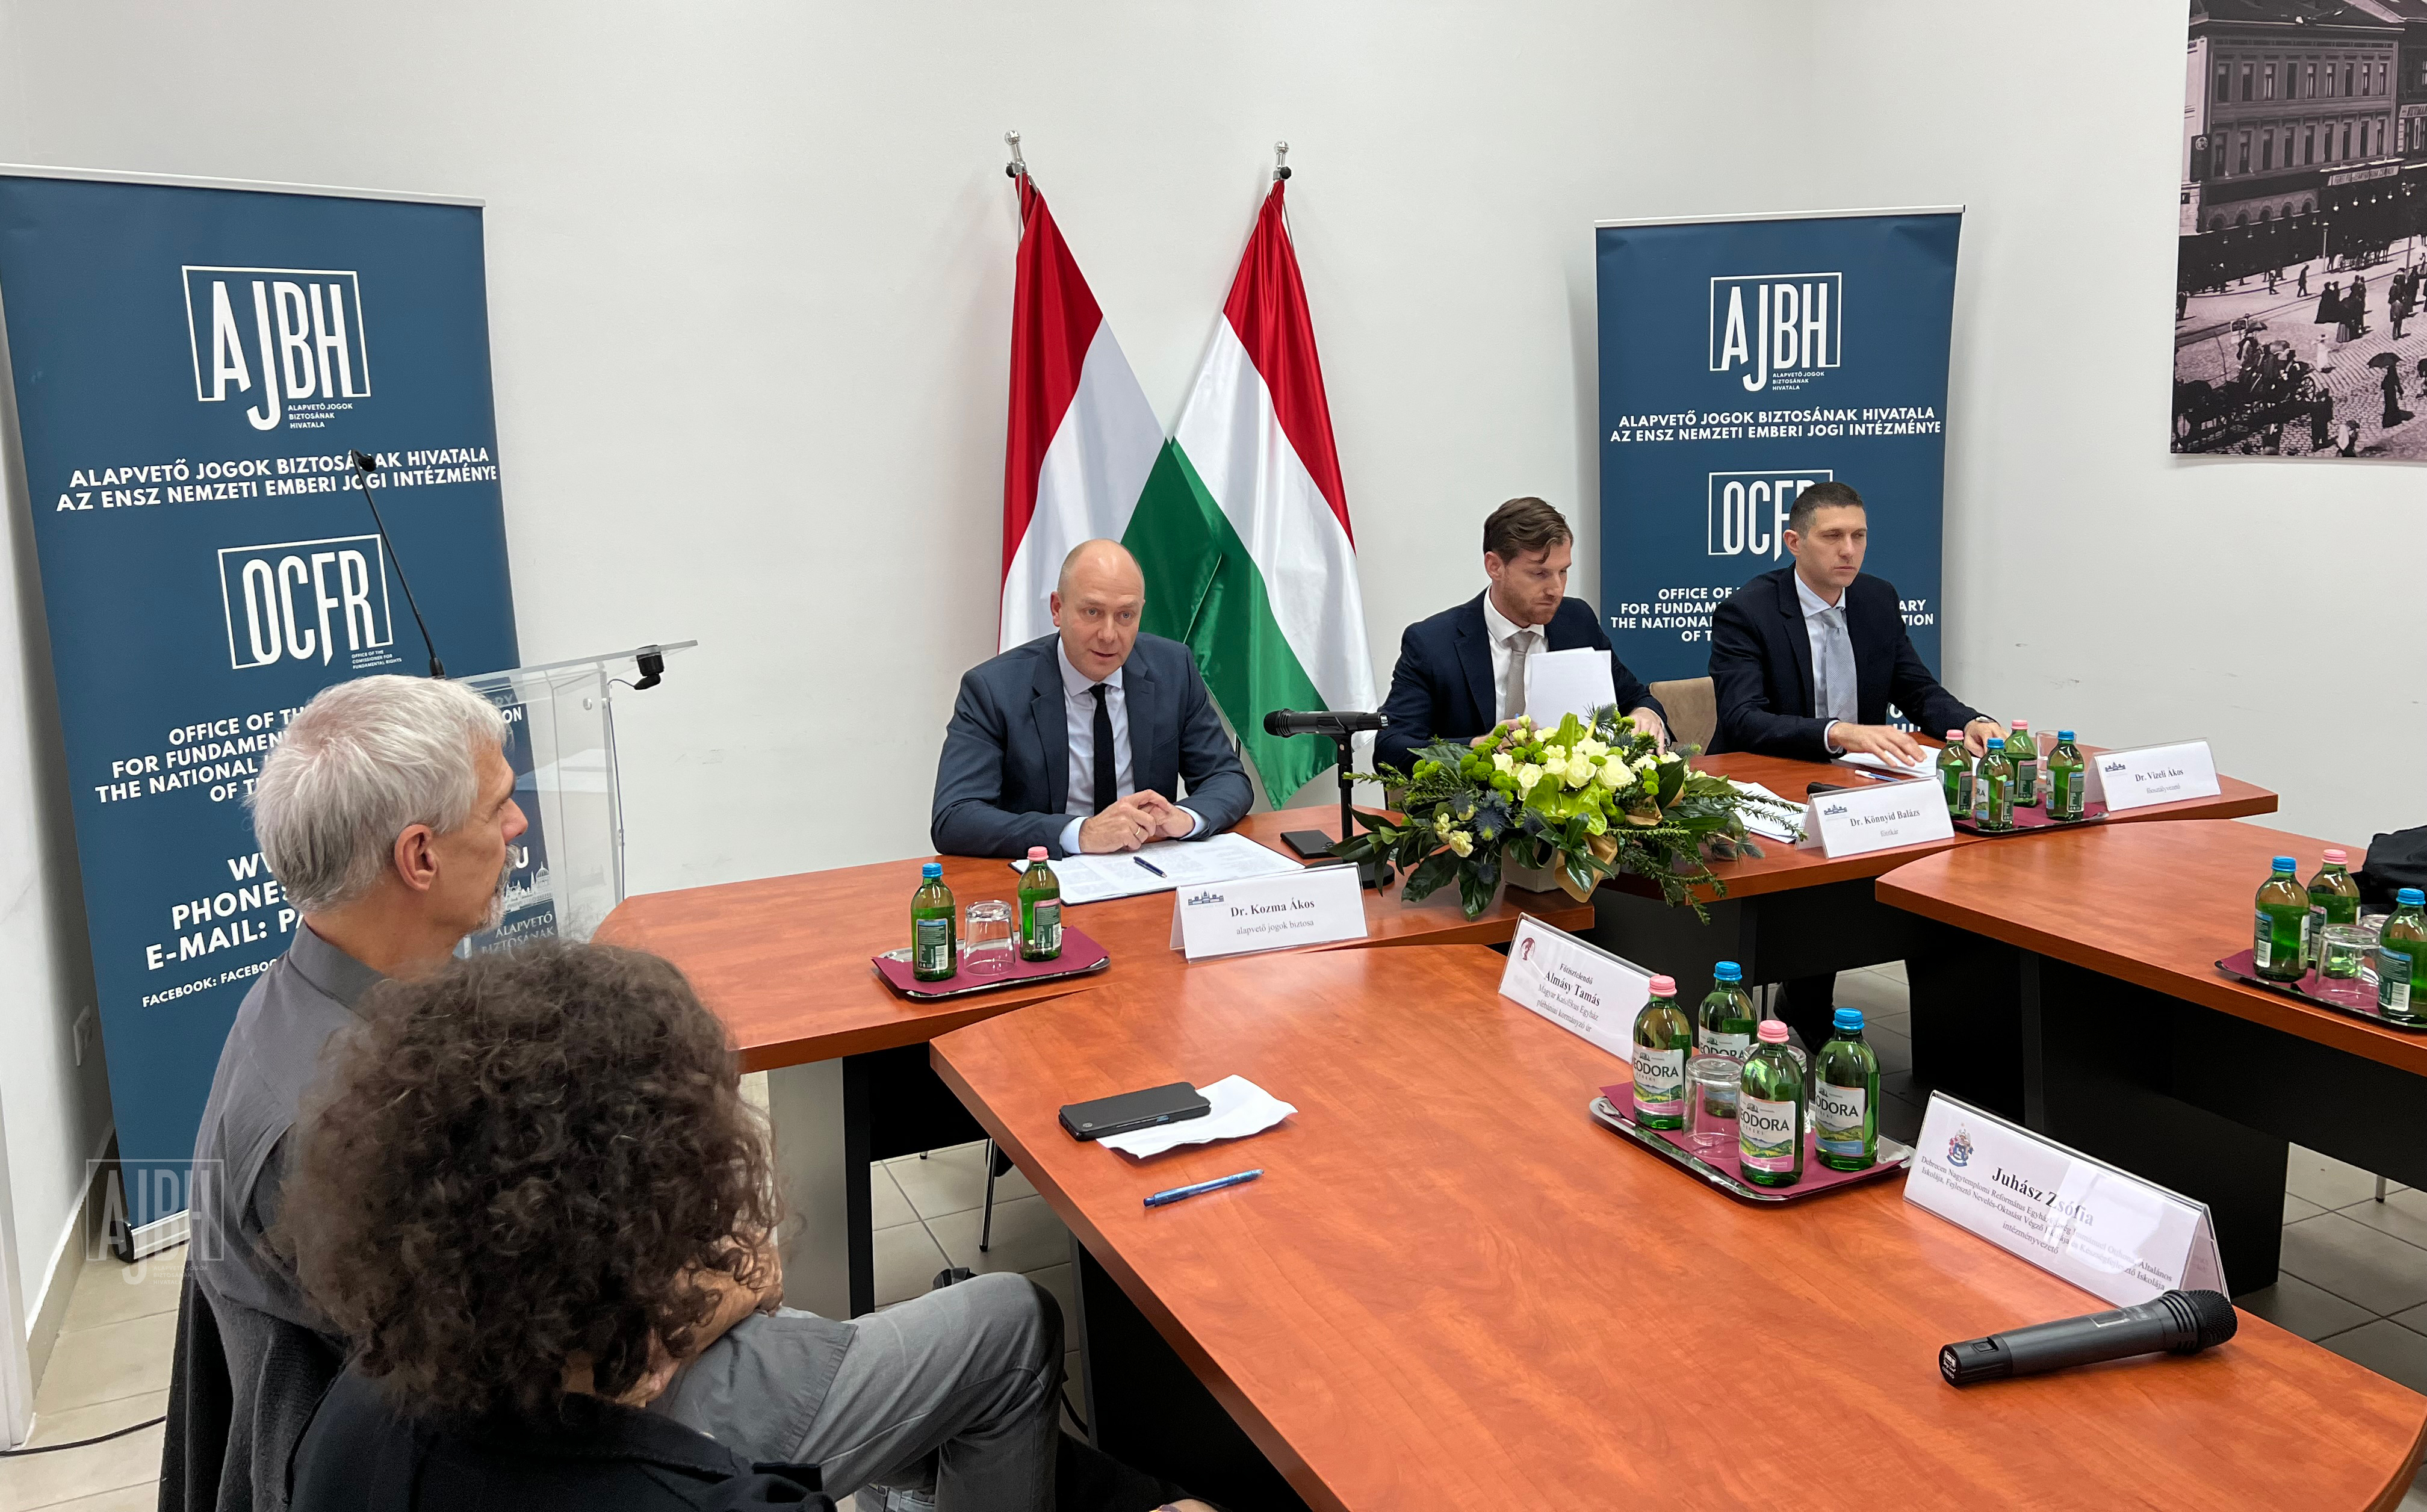 Meeting of Disability Advisory Board Held in Debrecen